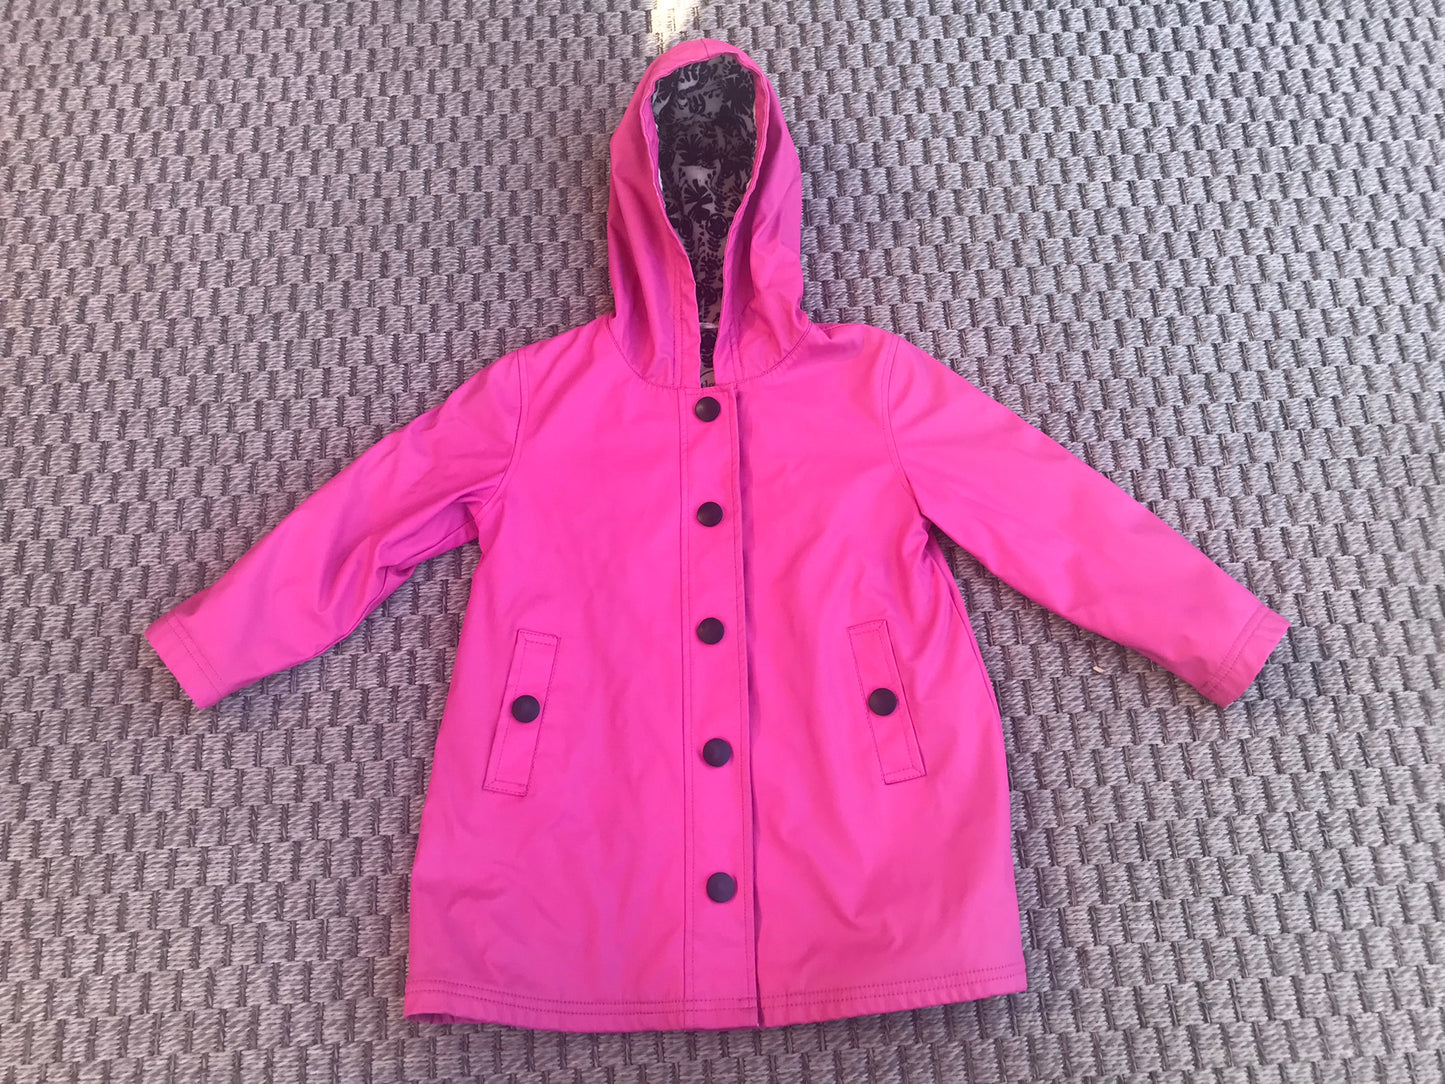 Rain Coat Child Size 5 Hatley Fushia Pink and Navy